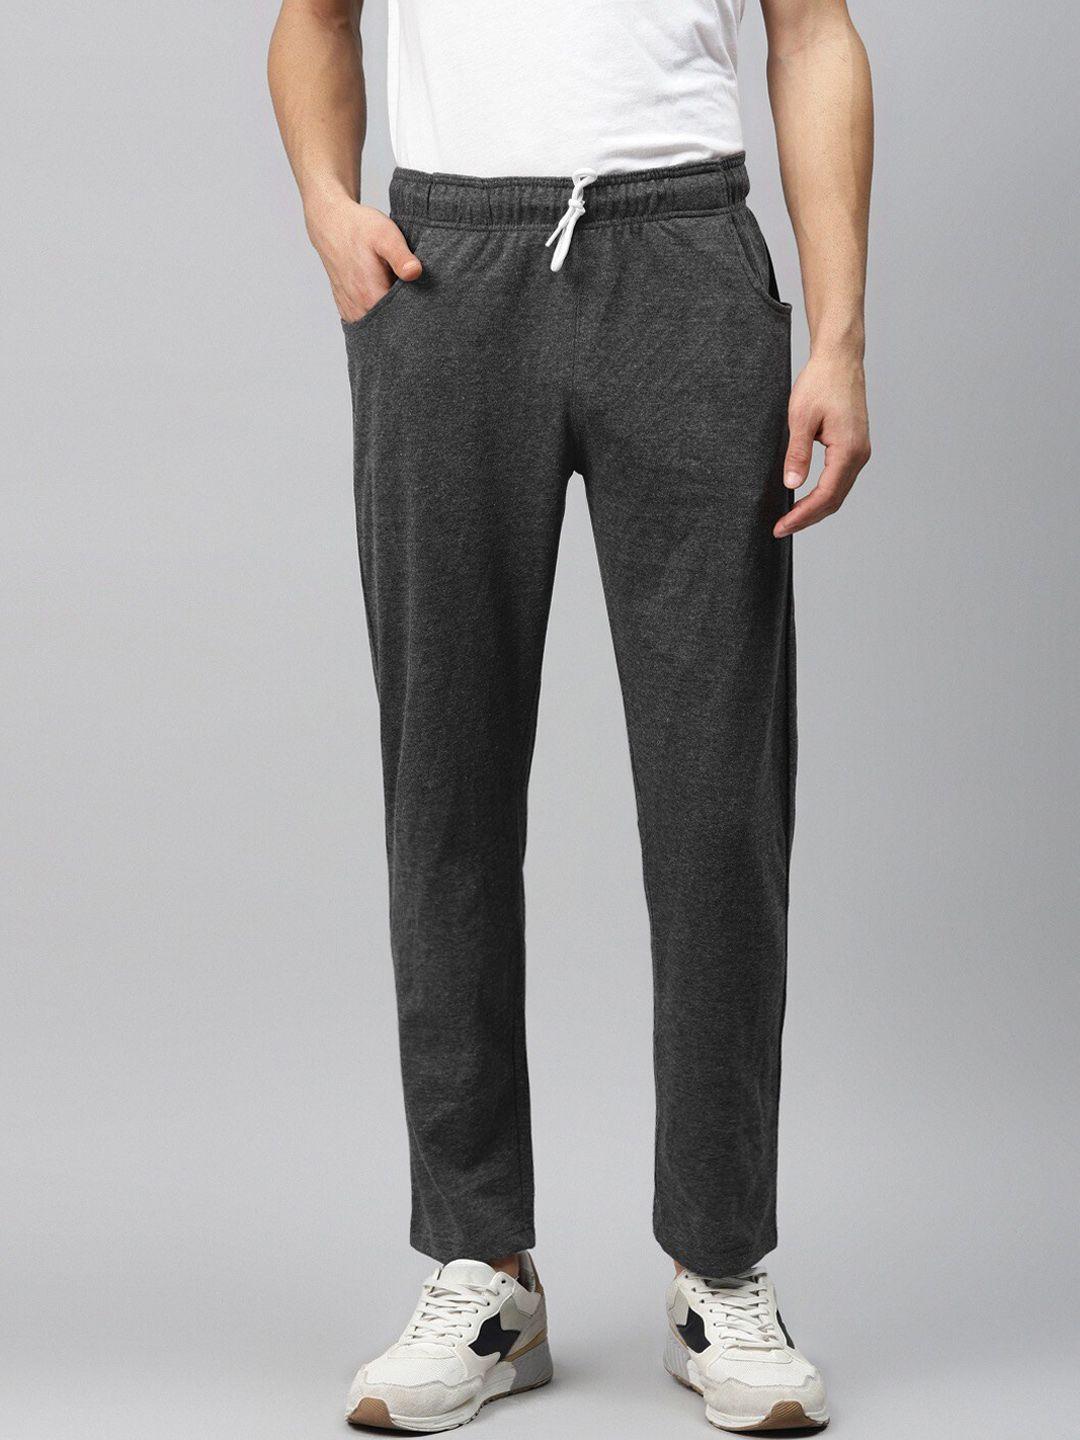 hubberholme-men-charcoal-grey-solid-slim-fit-track-pants